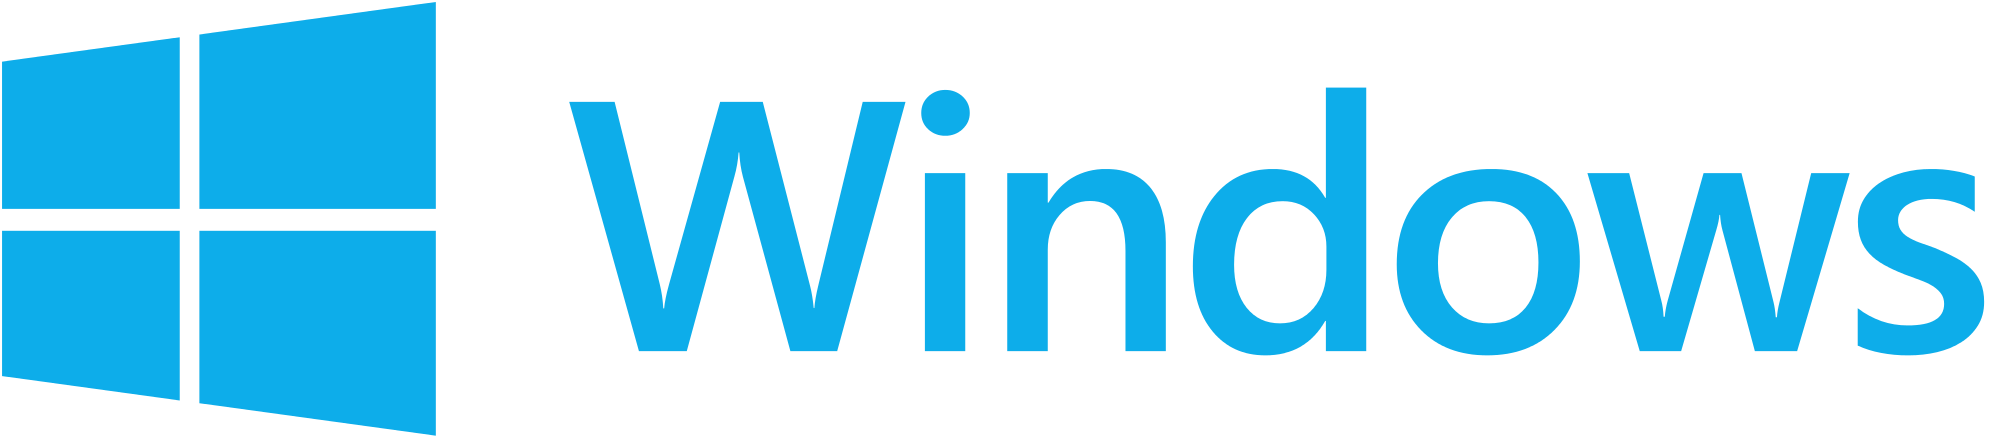 Windows Logo - Windows Logo and Name transparent PNG